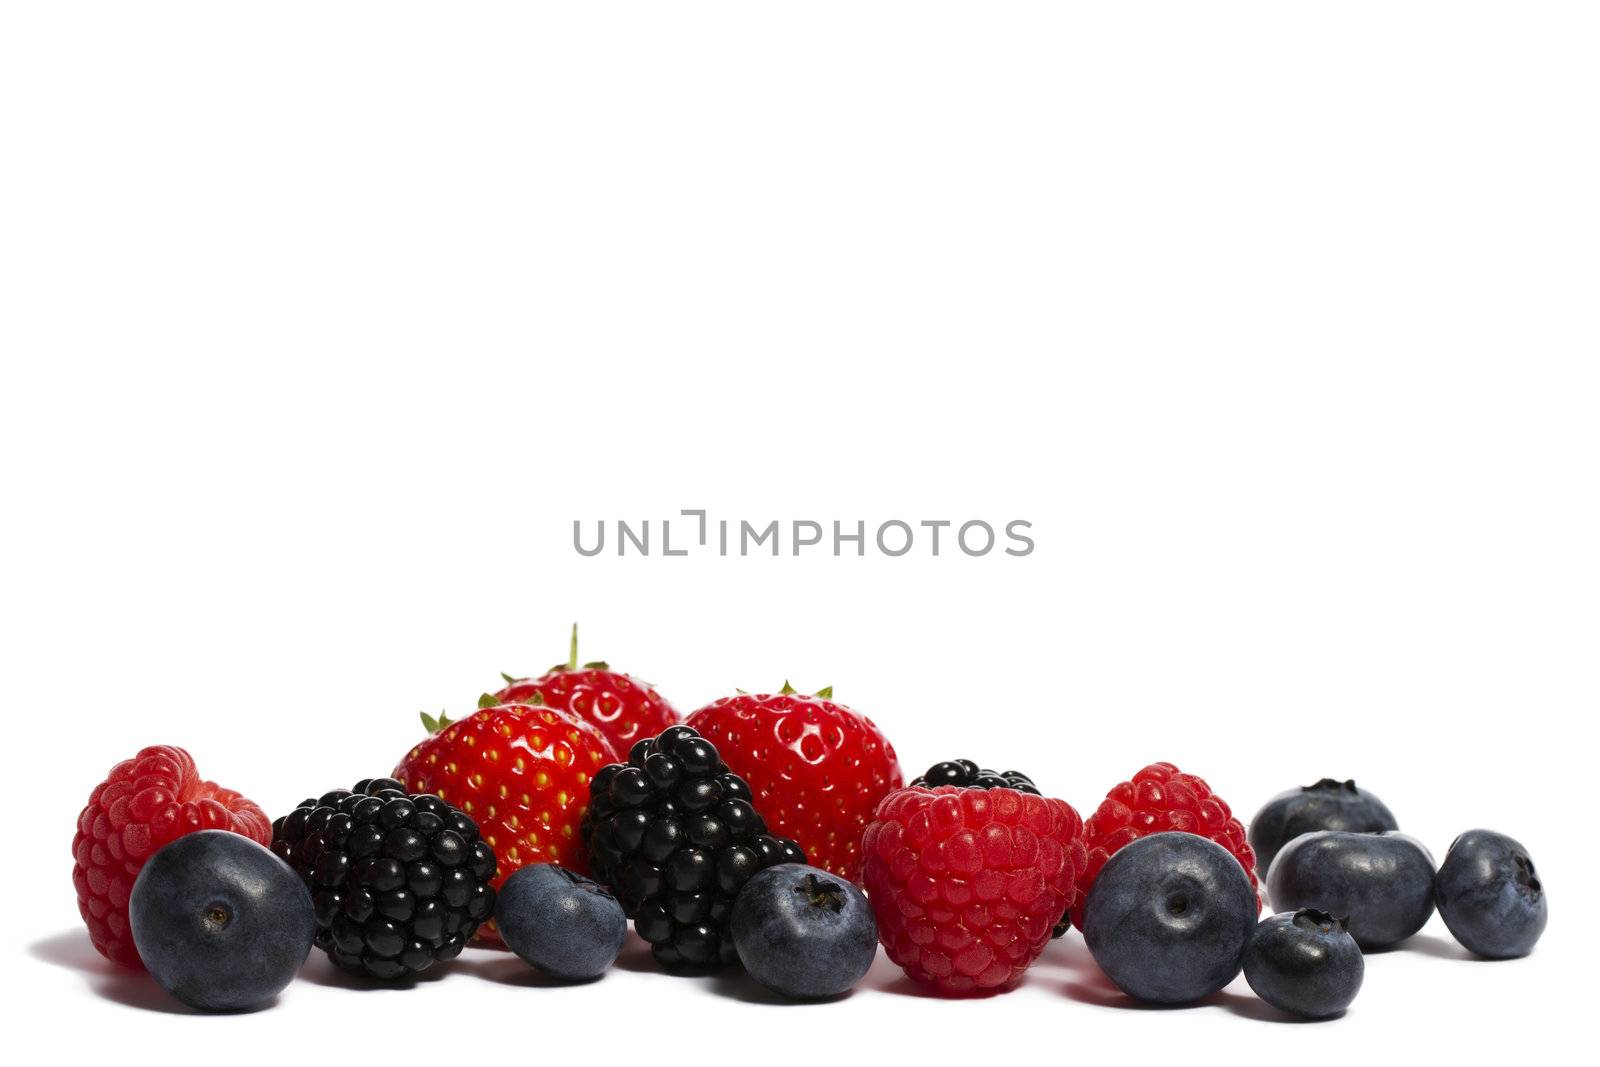 blueberries, strawberries blackberries and raspberries on white background